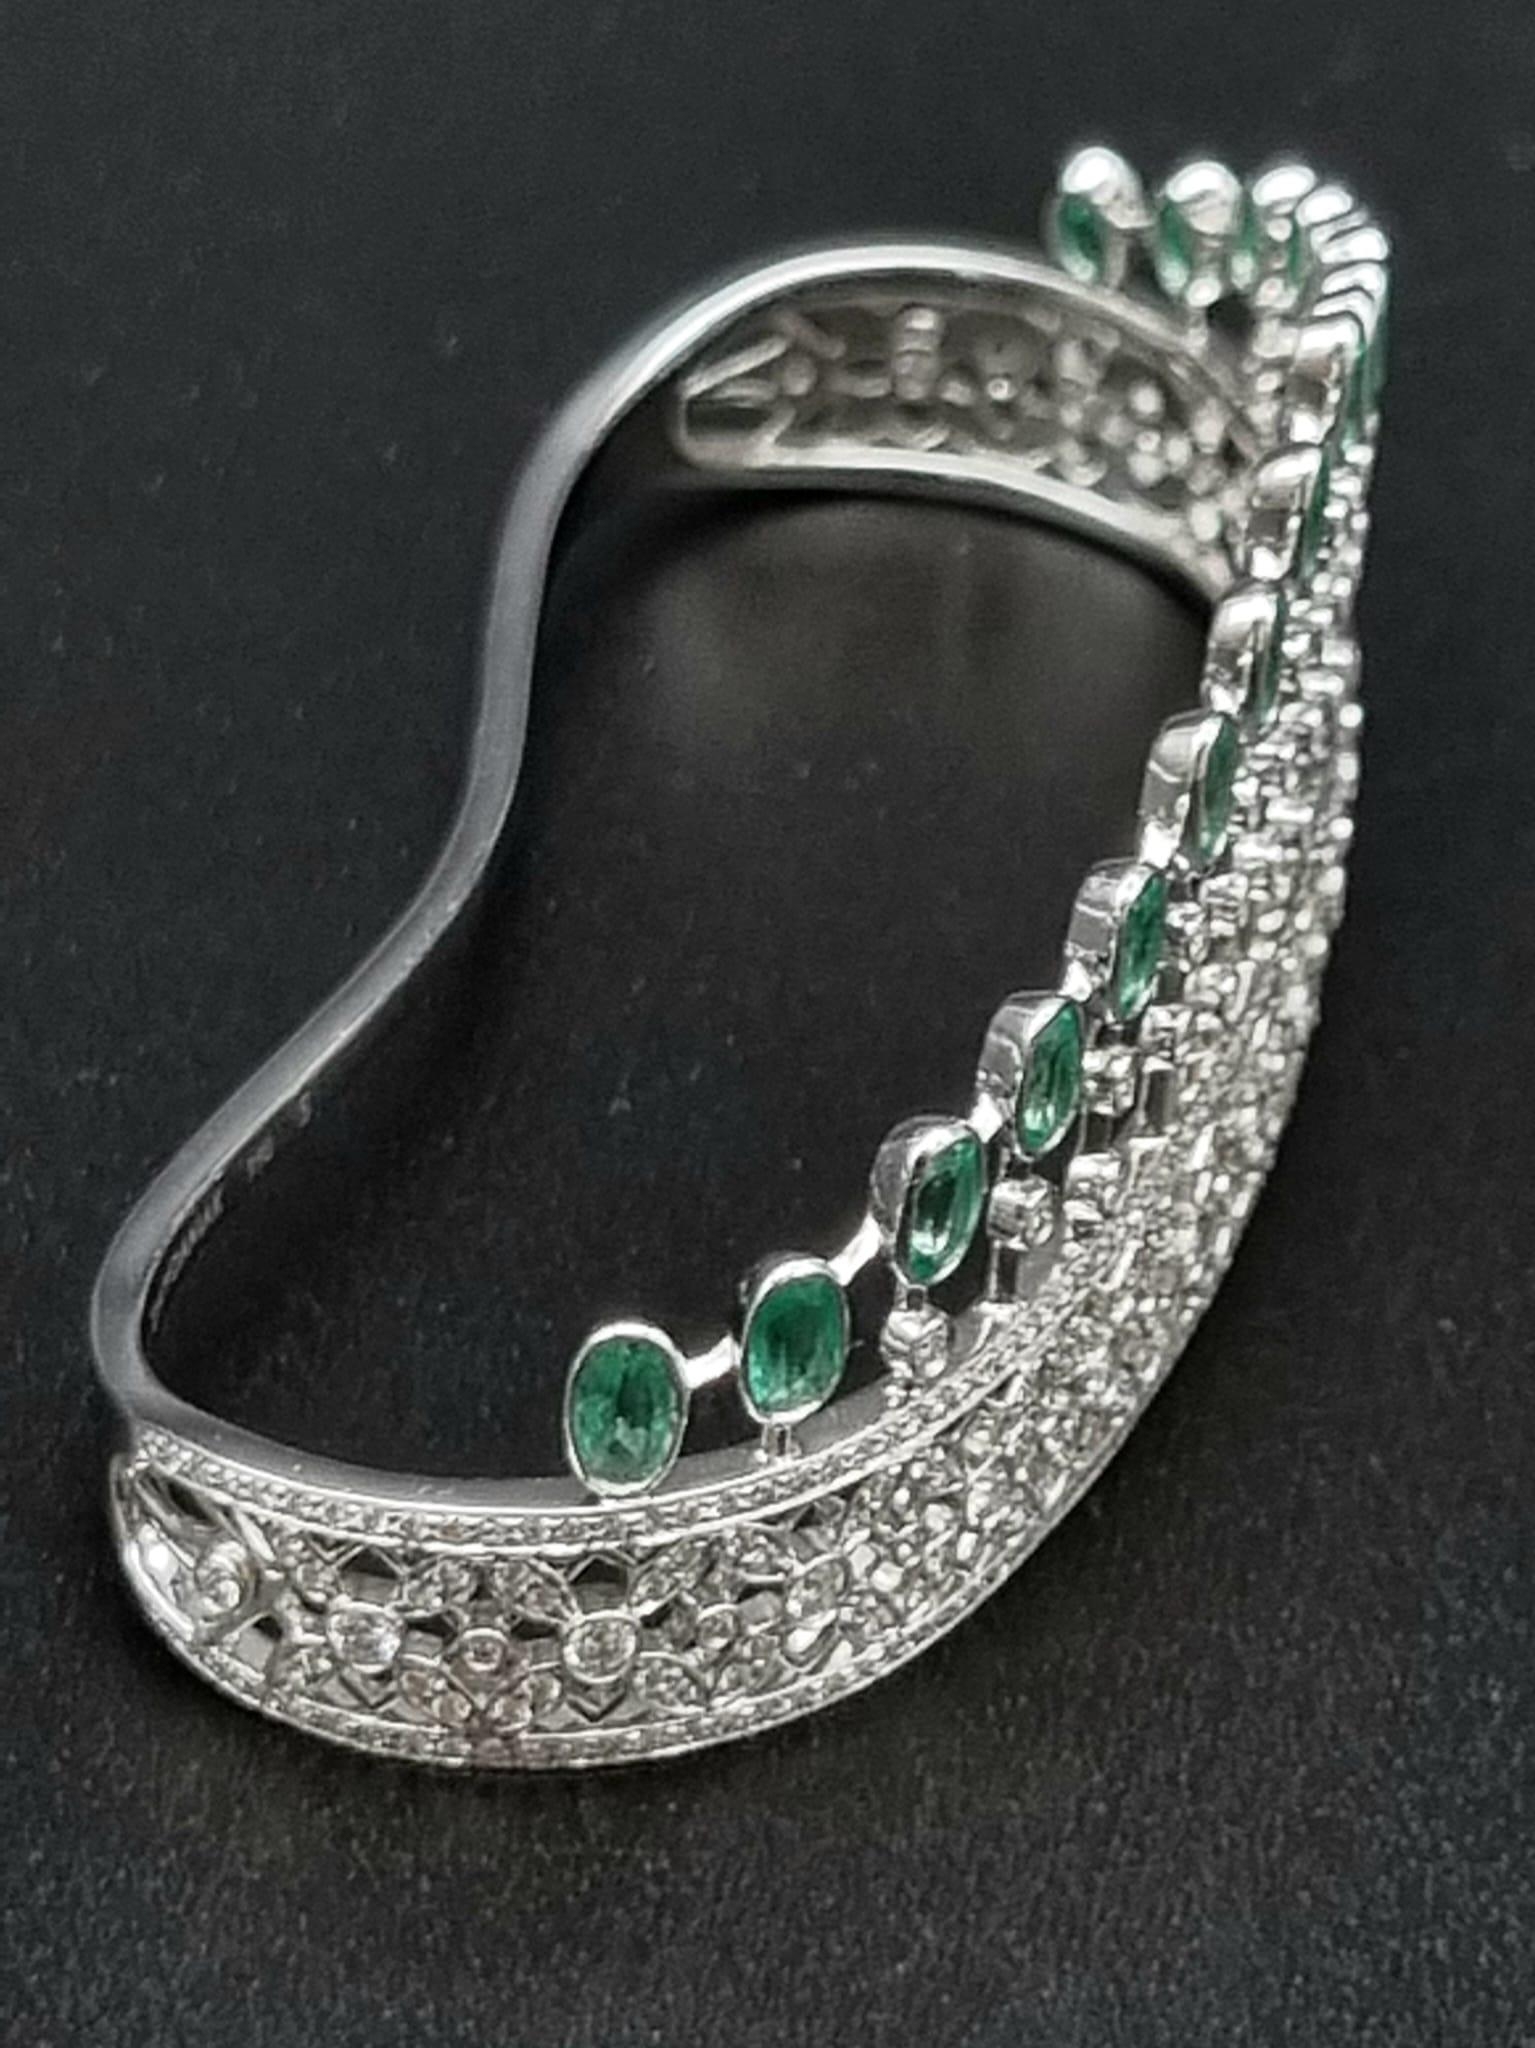 An Asian Inspired Gaydamak 18K White Gold Diamond and Emerald Dorsal Jewellery Piece. 17 Emeralds ( - Image 3 of 6